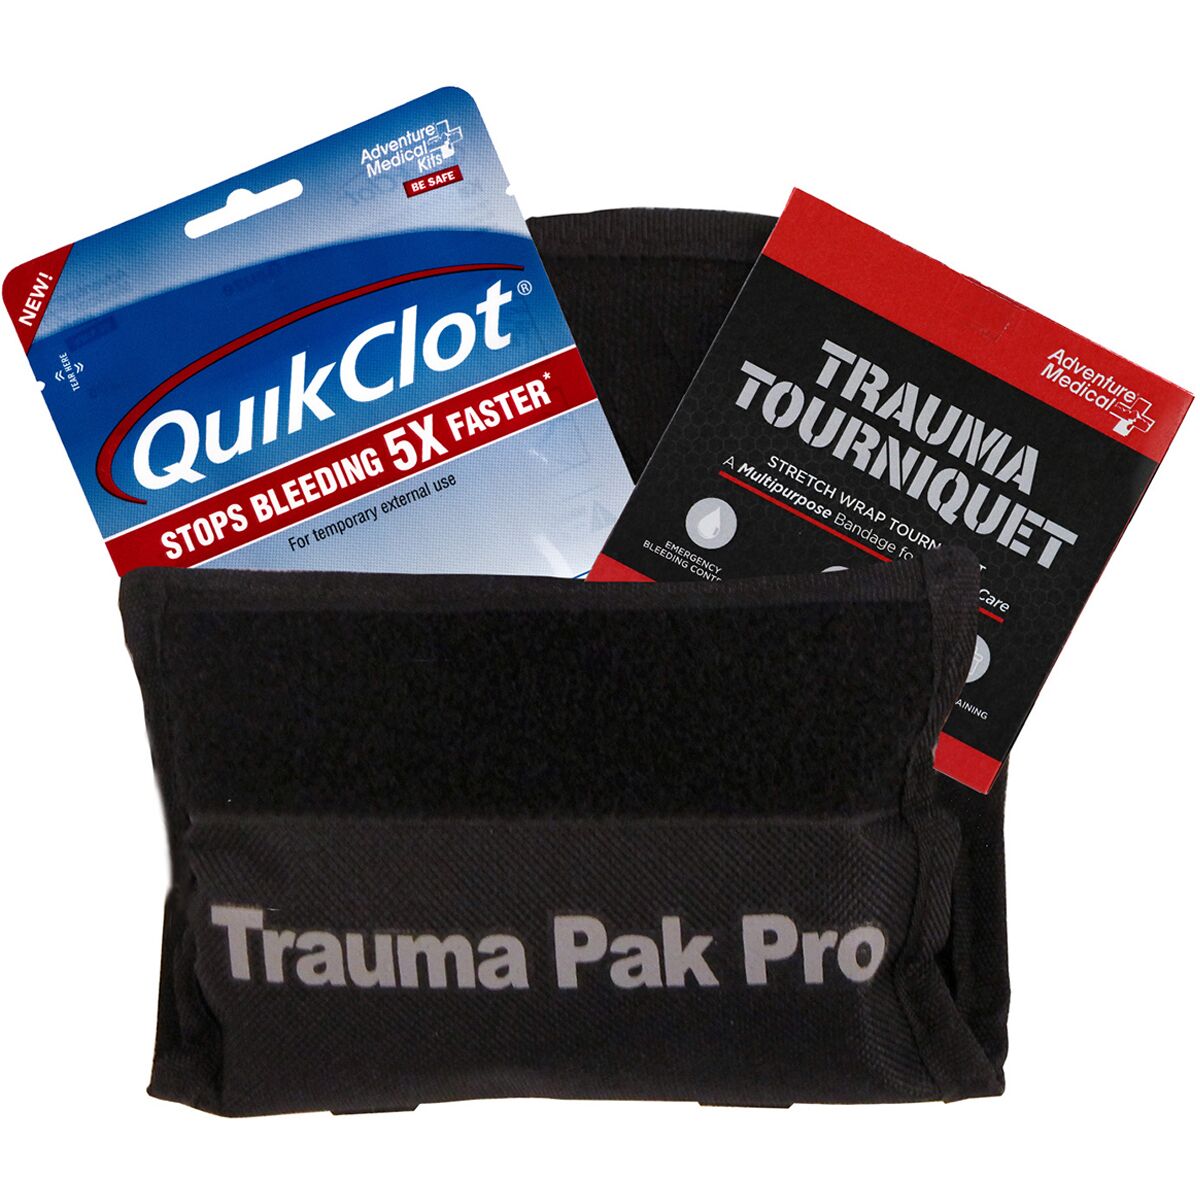 Adventure Medical Kits QuikClot Trauma Pack Pro + Tourniquet + QuikClot